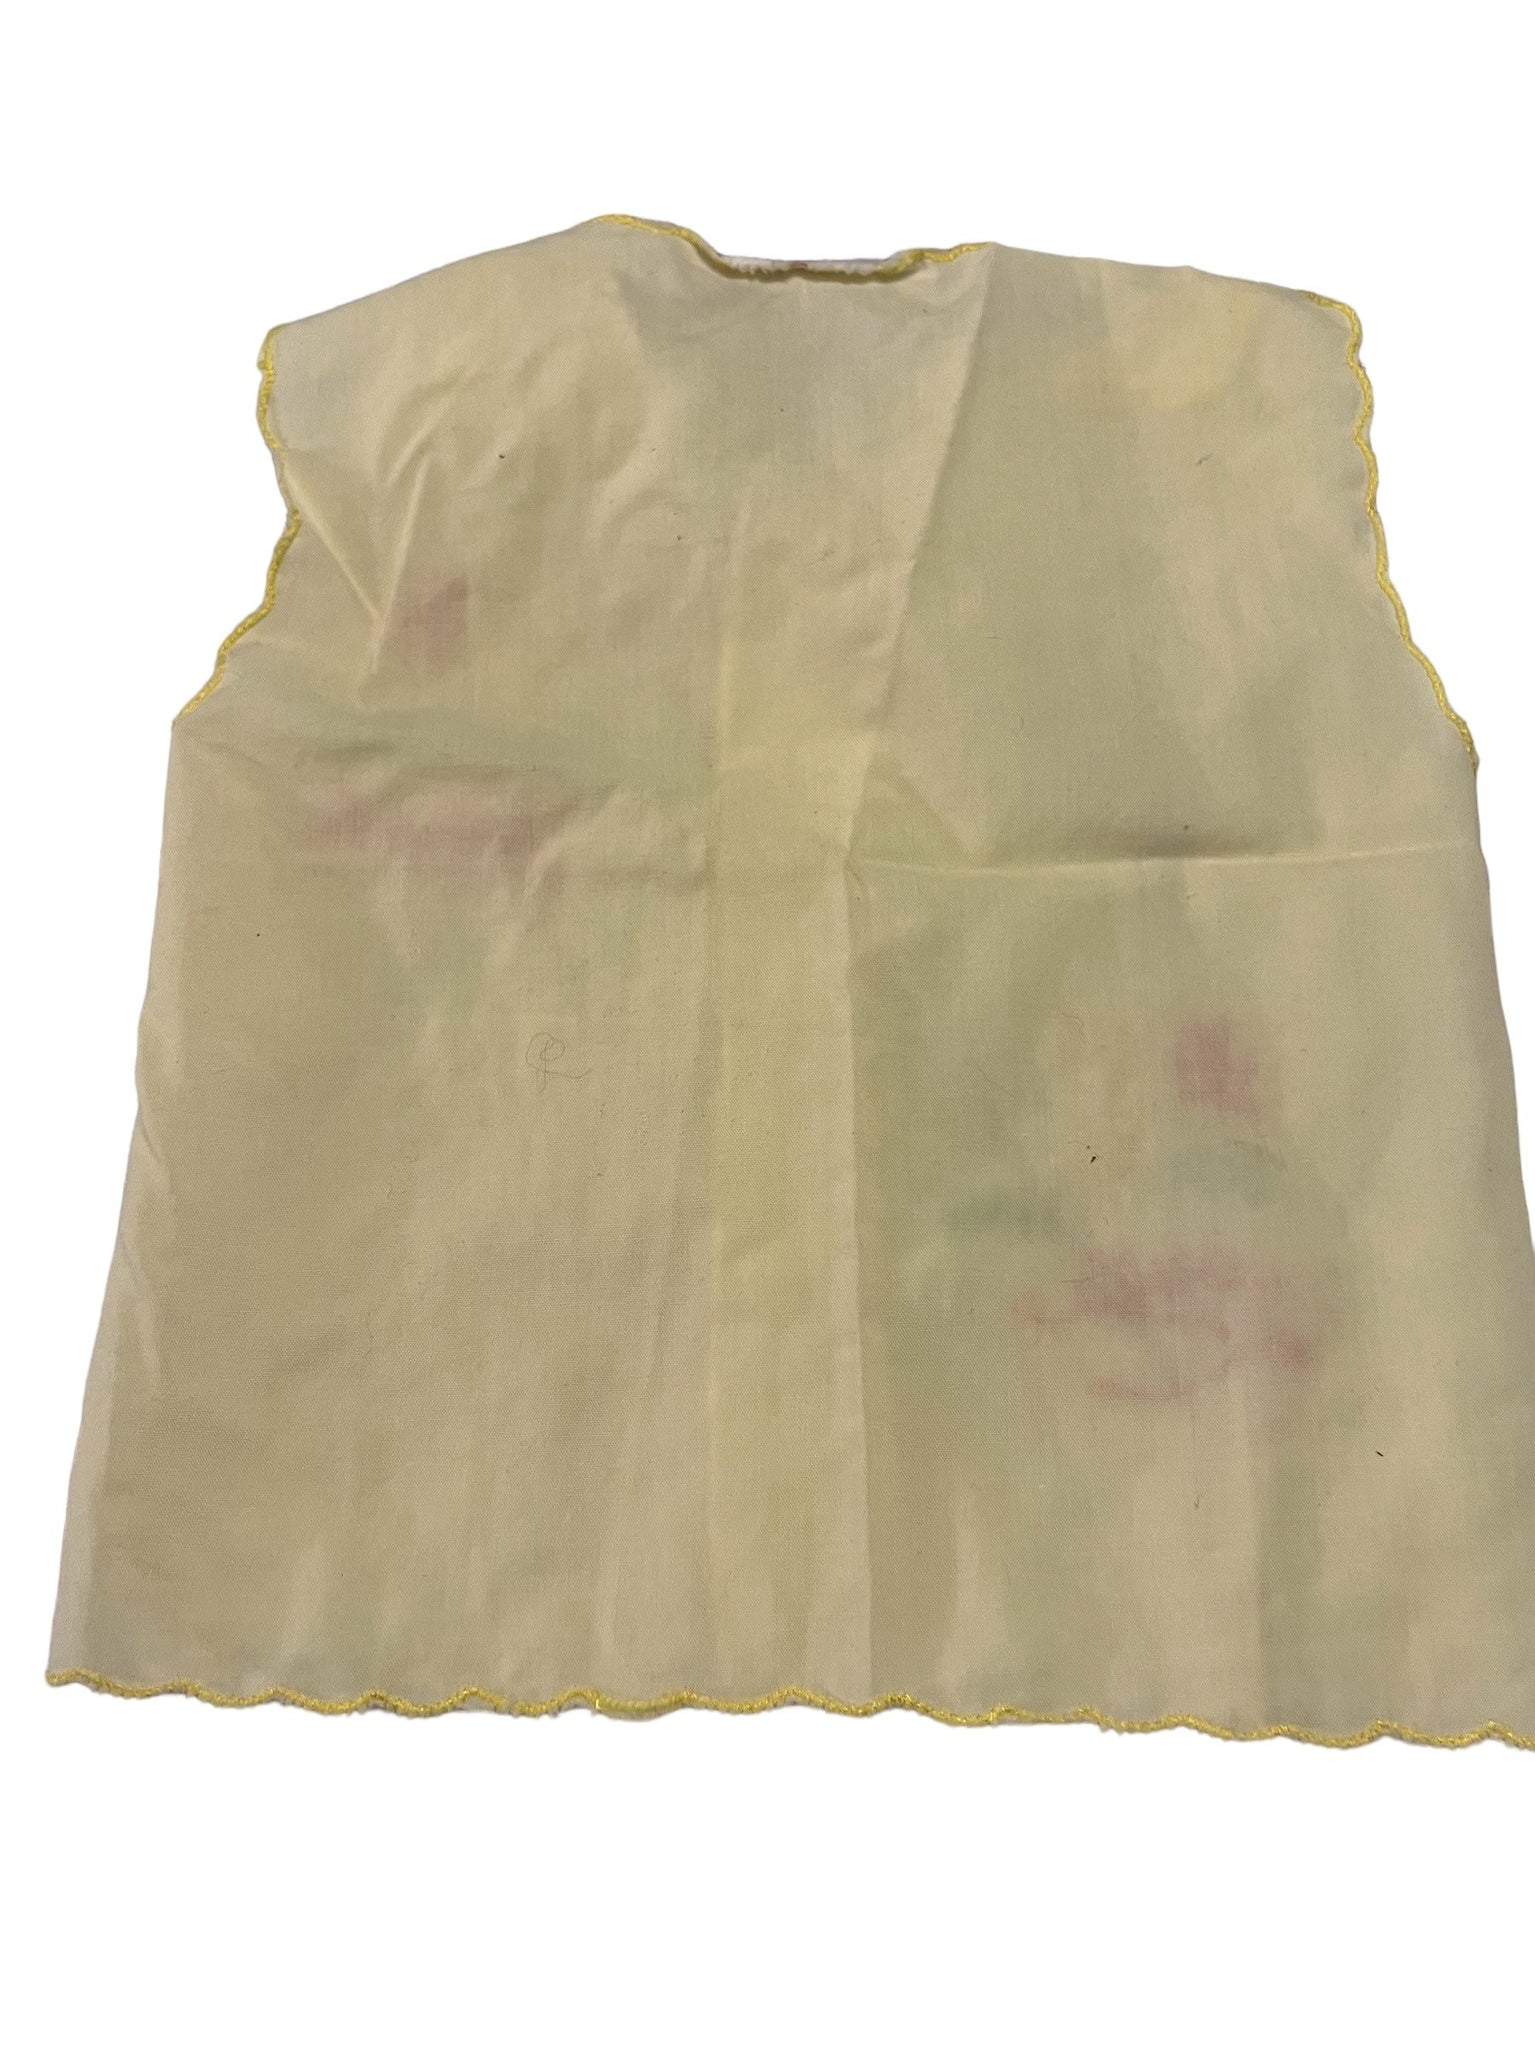 Vintage yellow Mon Petit diaper shirt 0-6 month